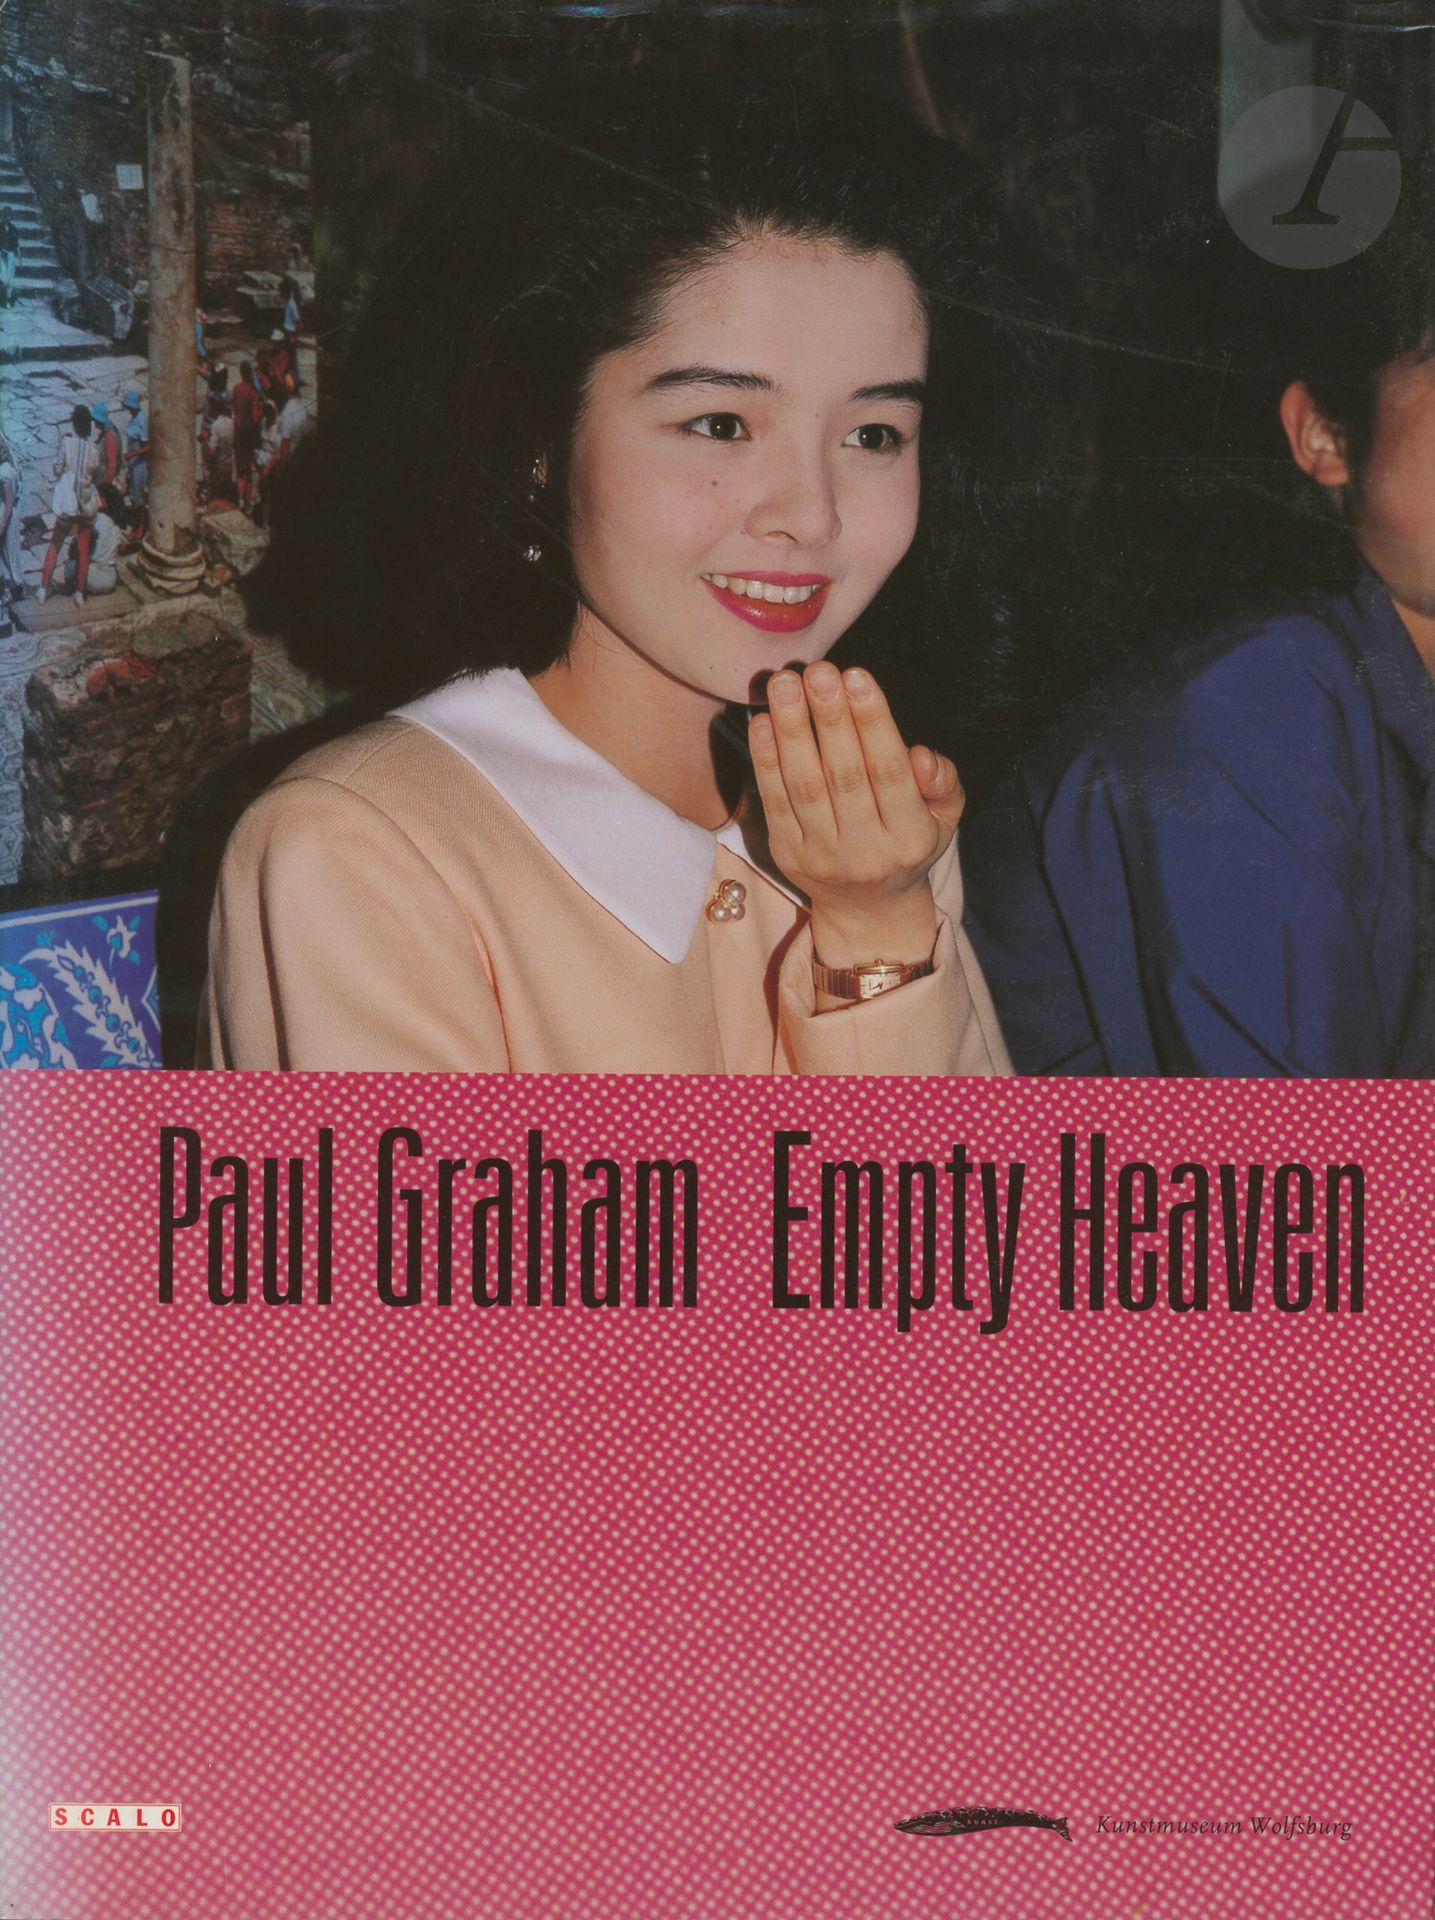 Null GRAHAM, PAUL (1956
) Paradiso vuoto.
Scalo, 1995.
In-4 (32,5 x 24,5 cm)
.
P&hellip;